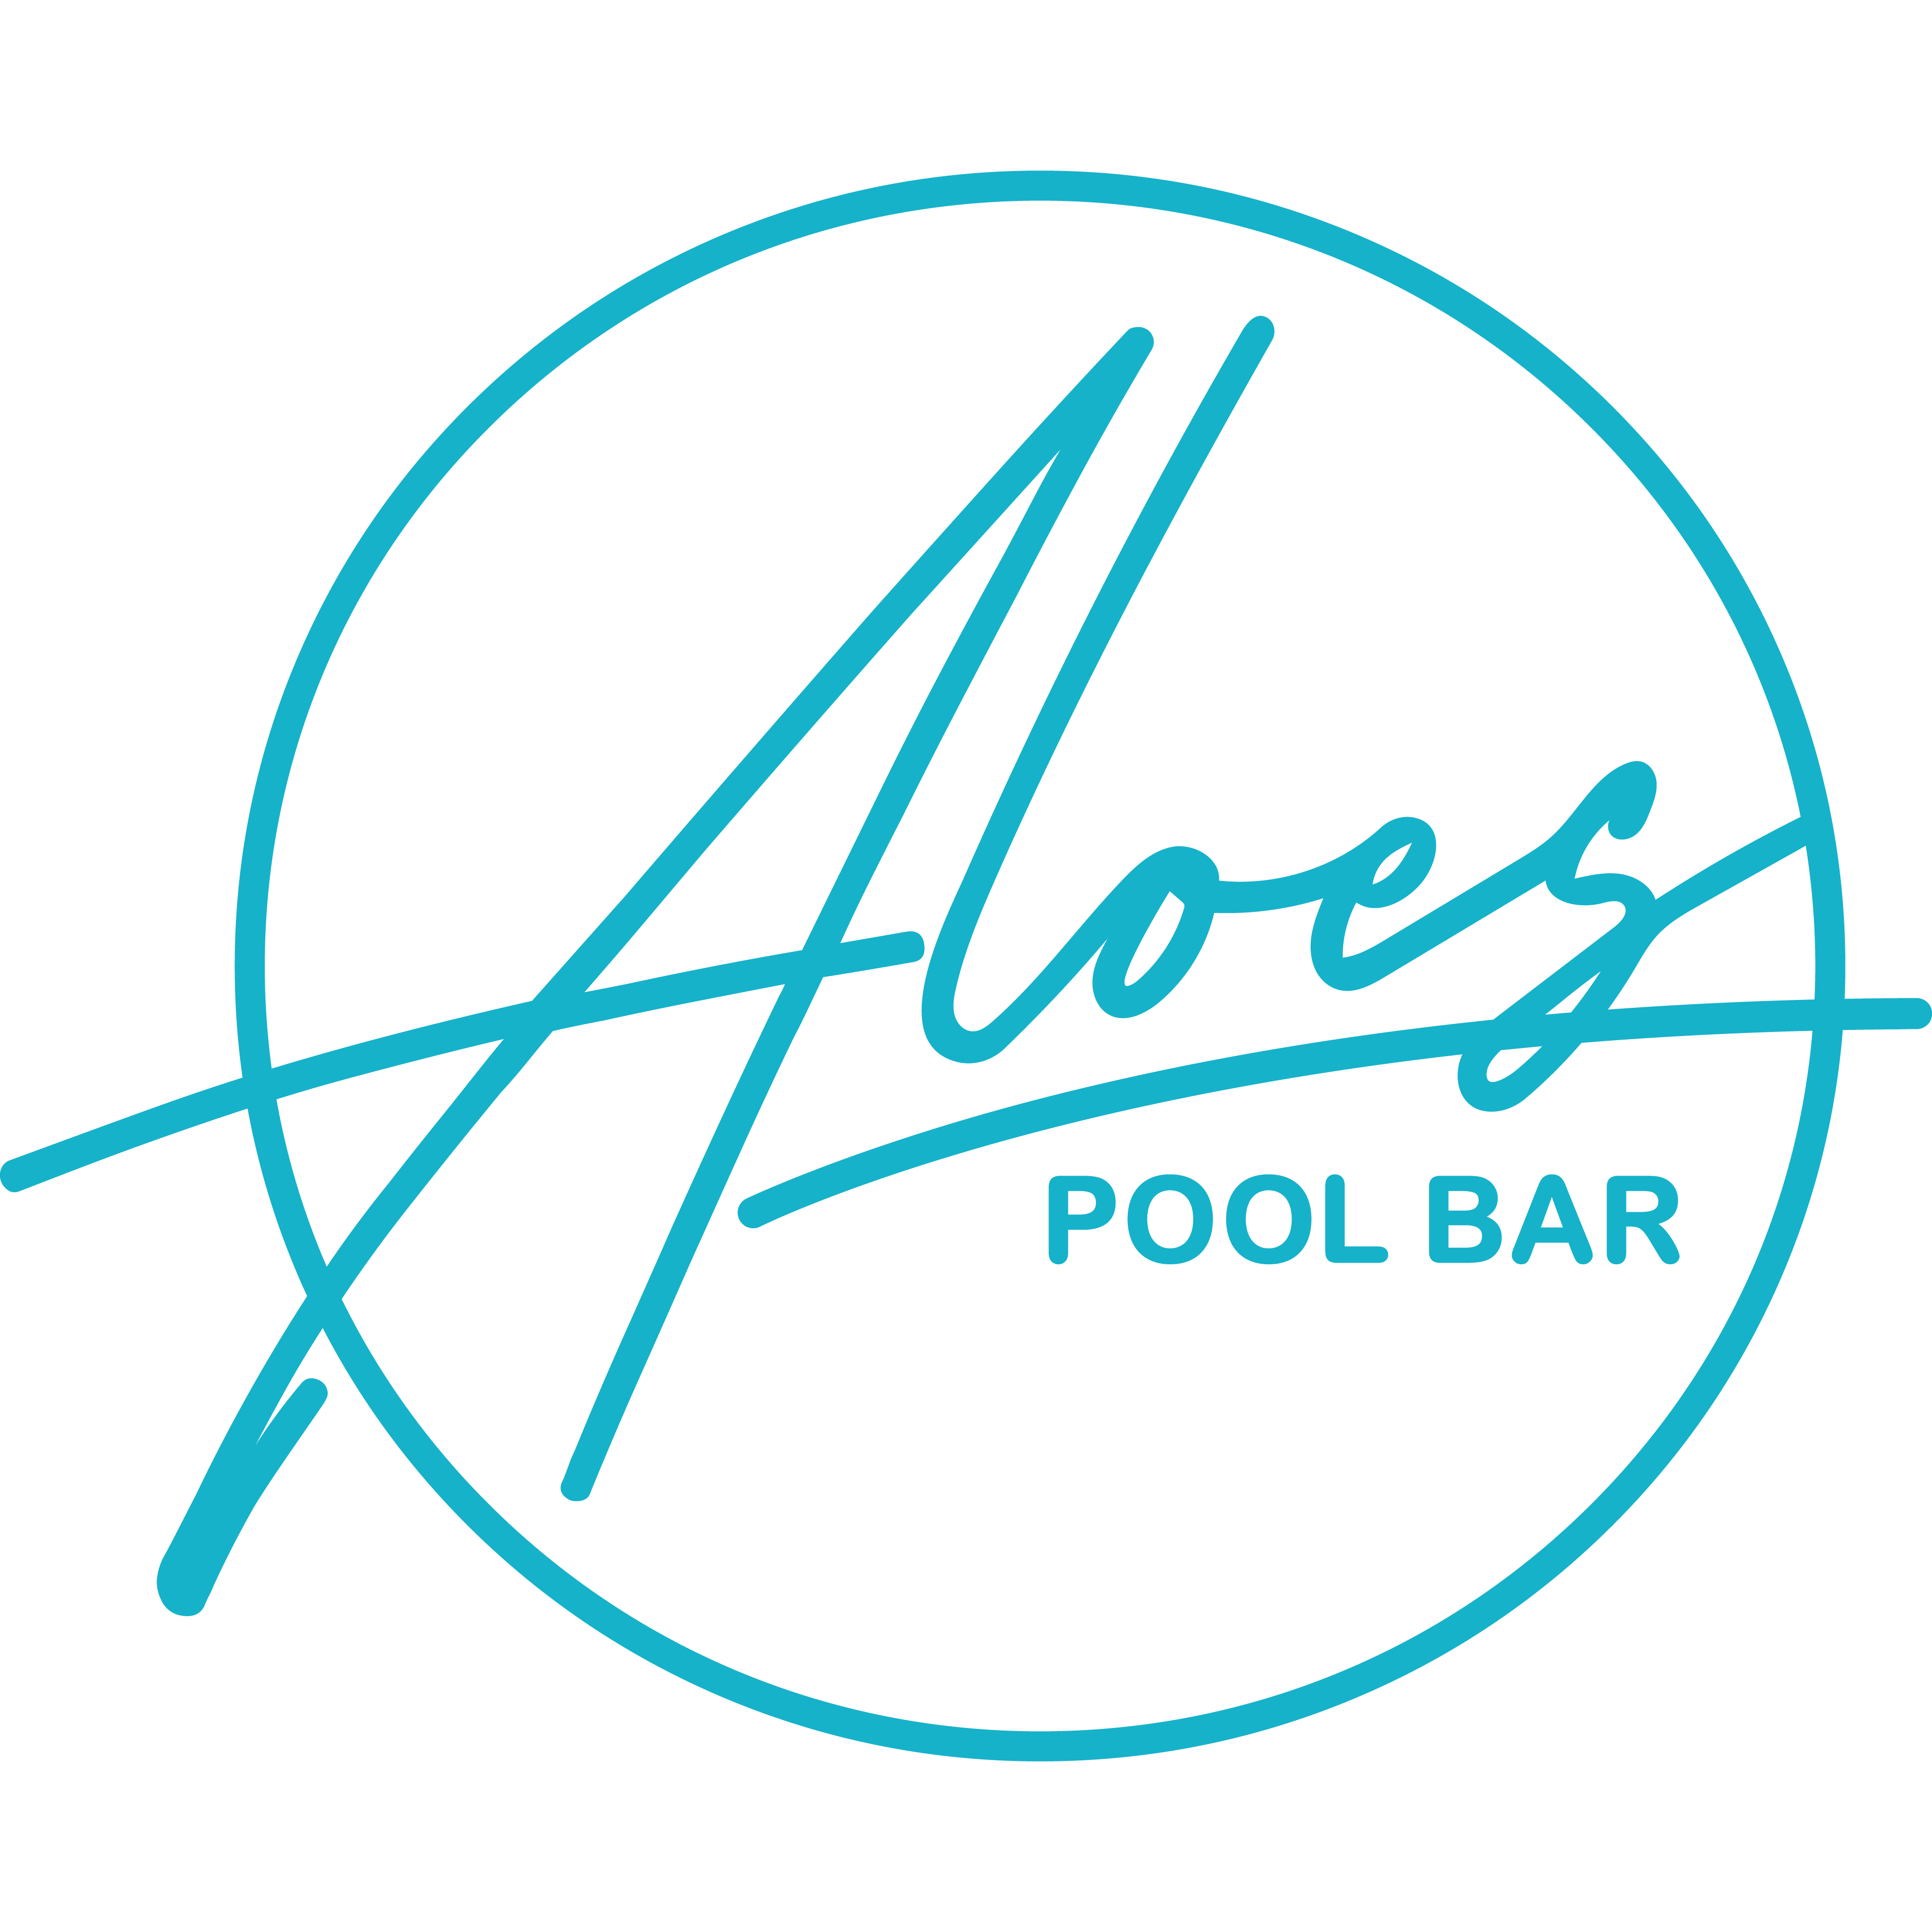 Aloes Pool Bar logo logo design by logo designer Daniel Fernandez for your inspiration and for the worlds largest logo competition